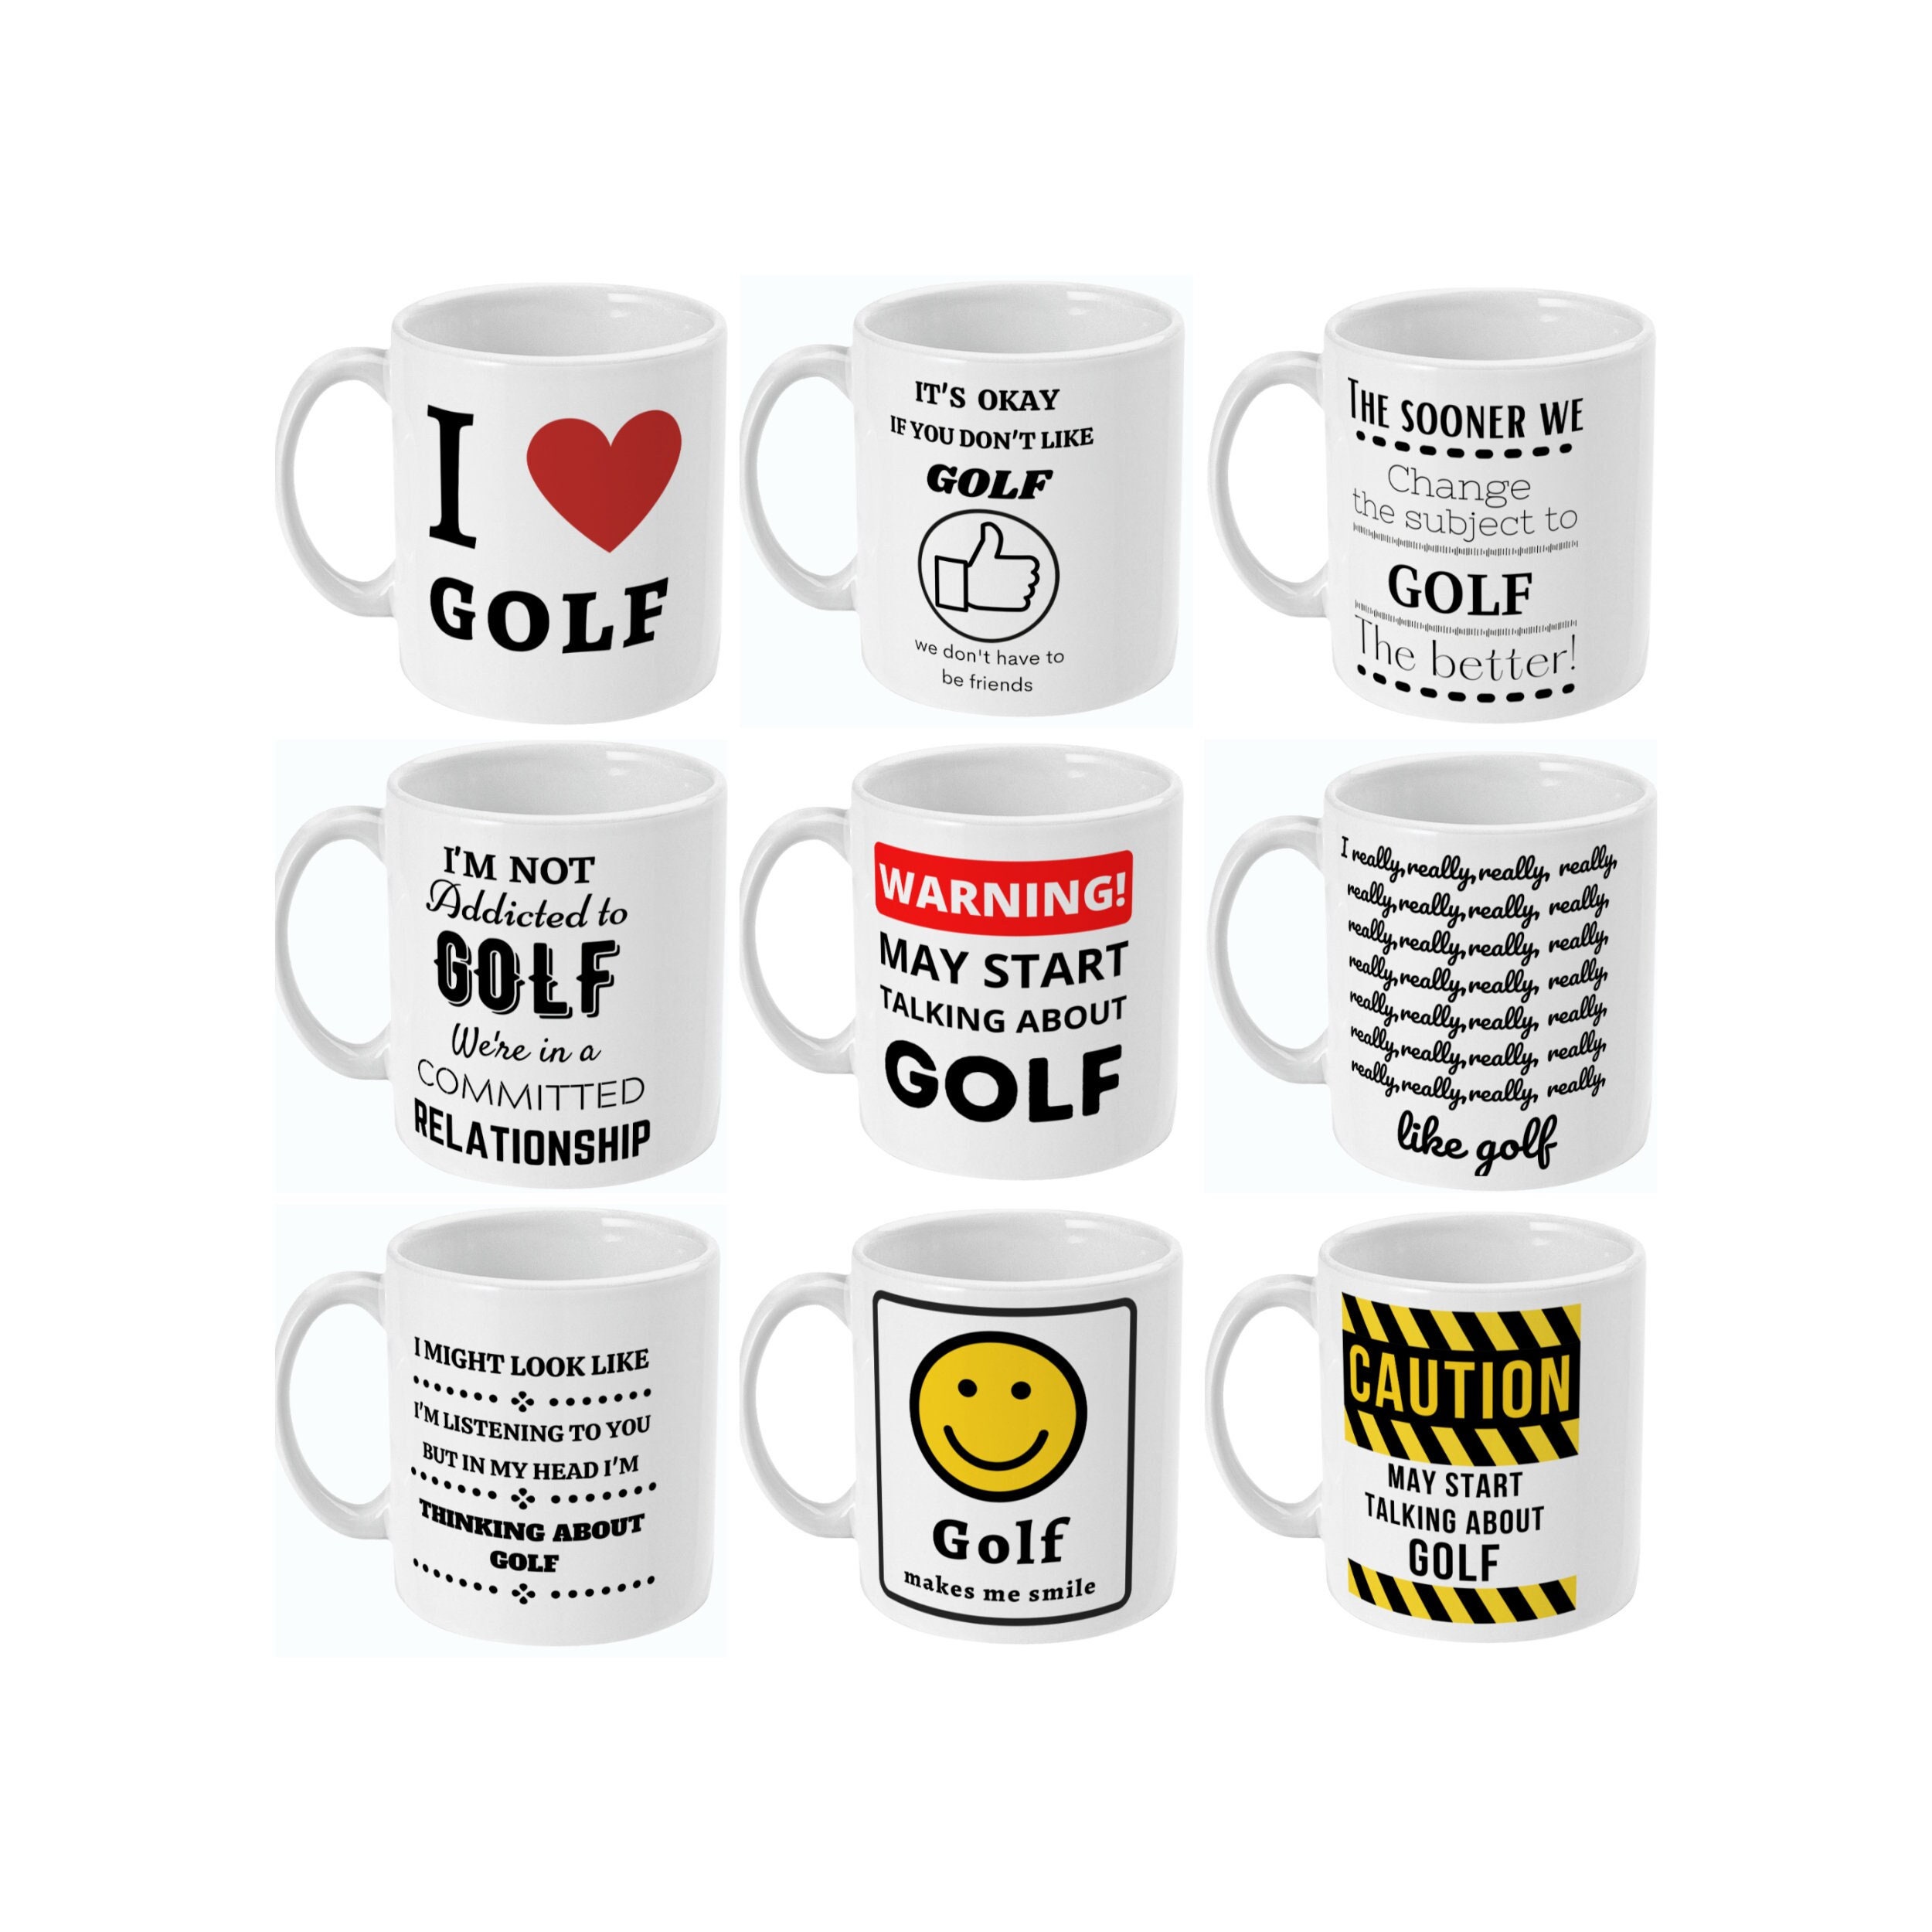 Taza de golf personalizada Little Miss Golfalot regalo para 